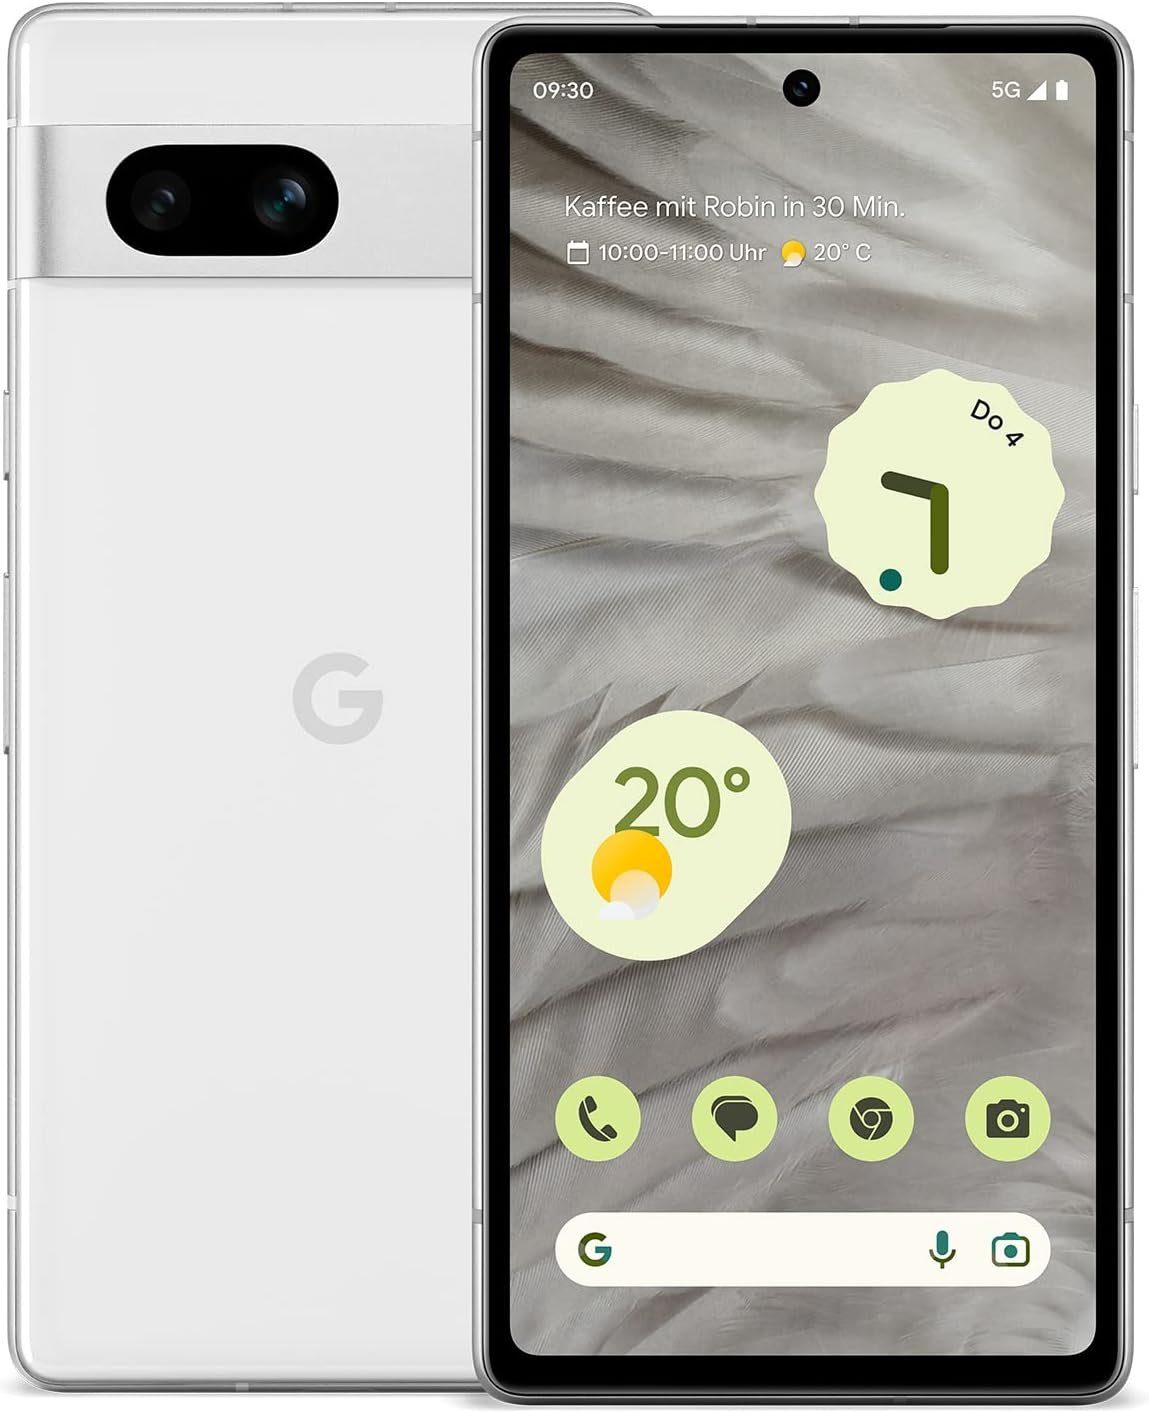 Google Pixel 7a - Dual Sim - 5G - ohne Simlock - Android Smartphone (15,20 cm/6.1 Zoll, 128 GB Speicherplatz, 64 MP Kamera, Dual Kamera Handy)